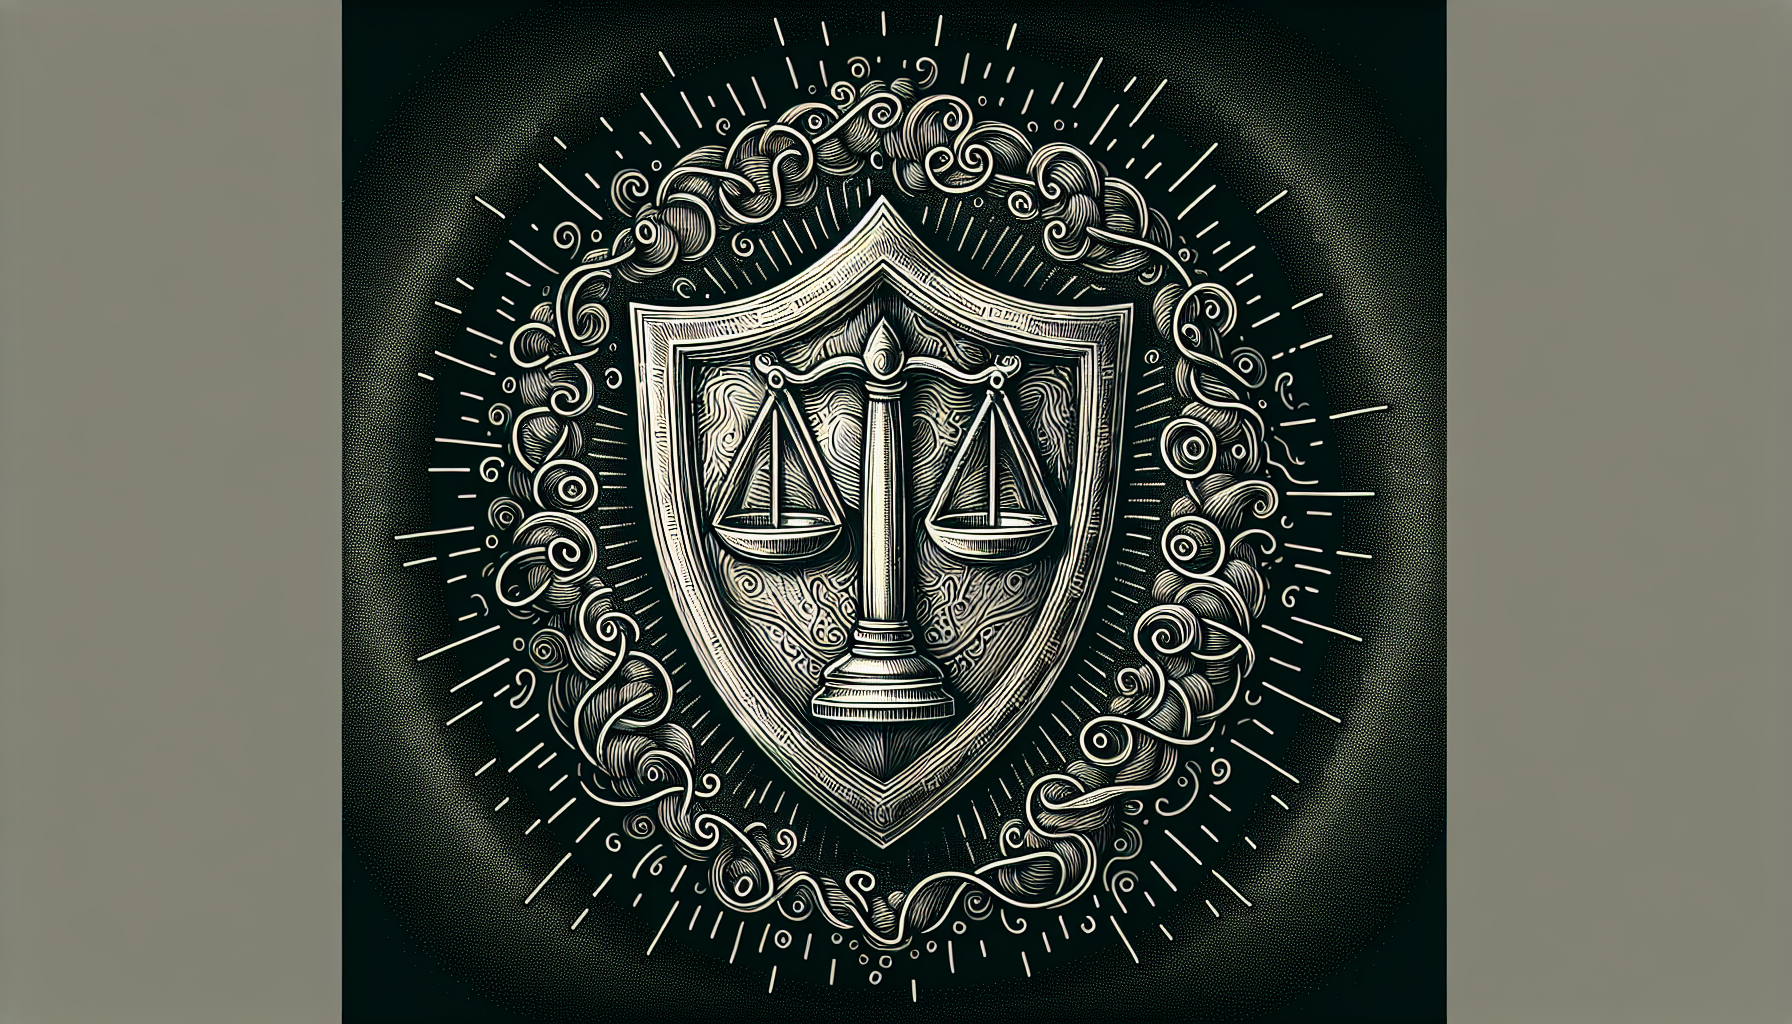 Illustration depicting a shield symbolizing legal protection